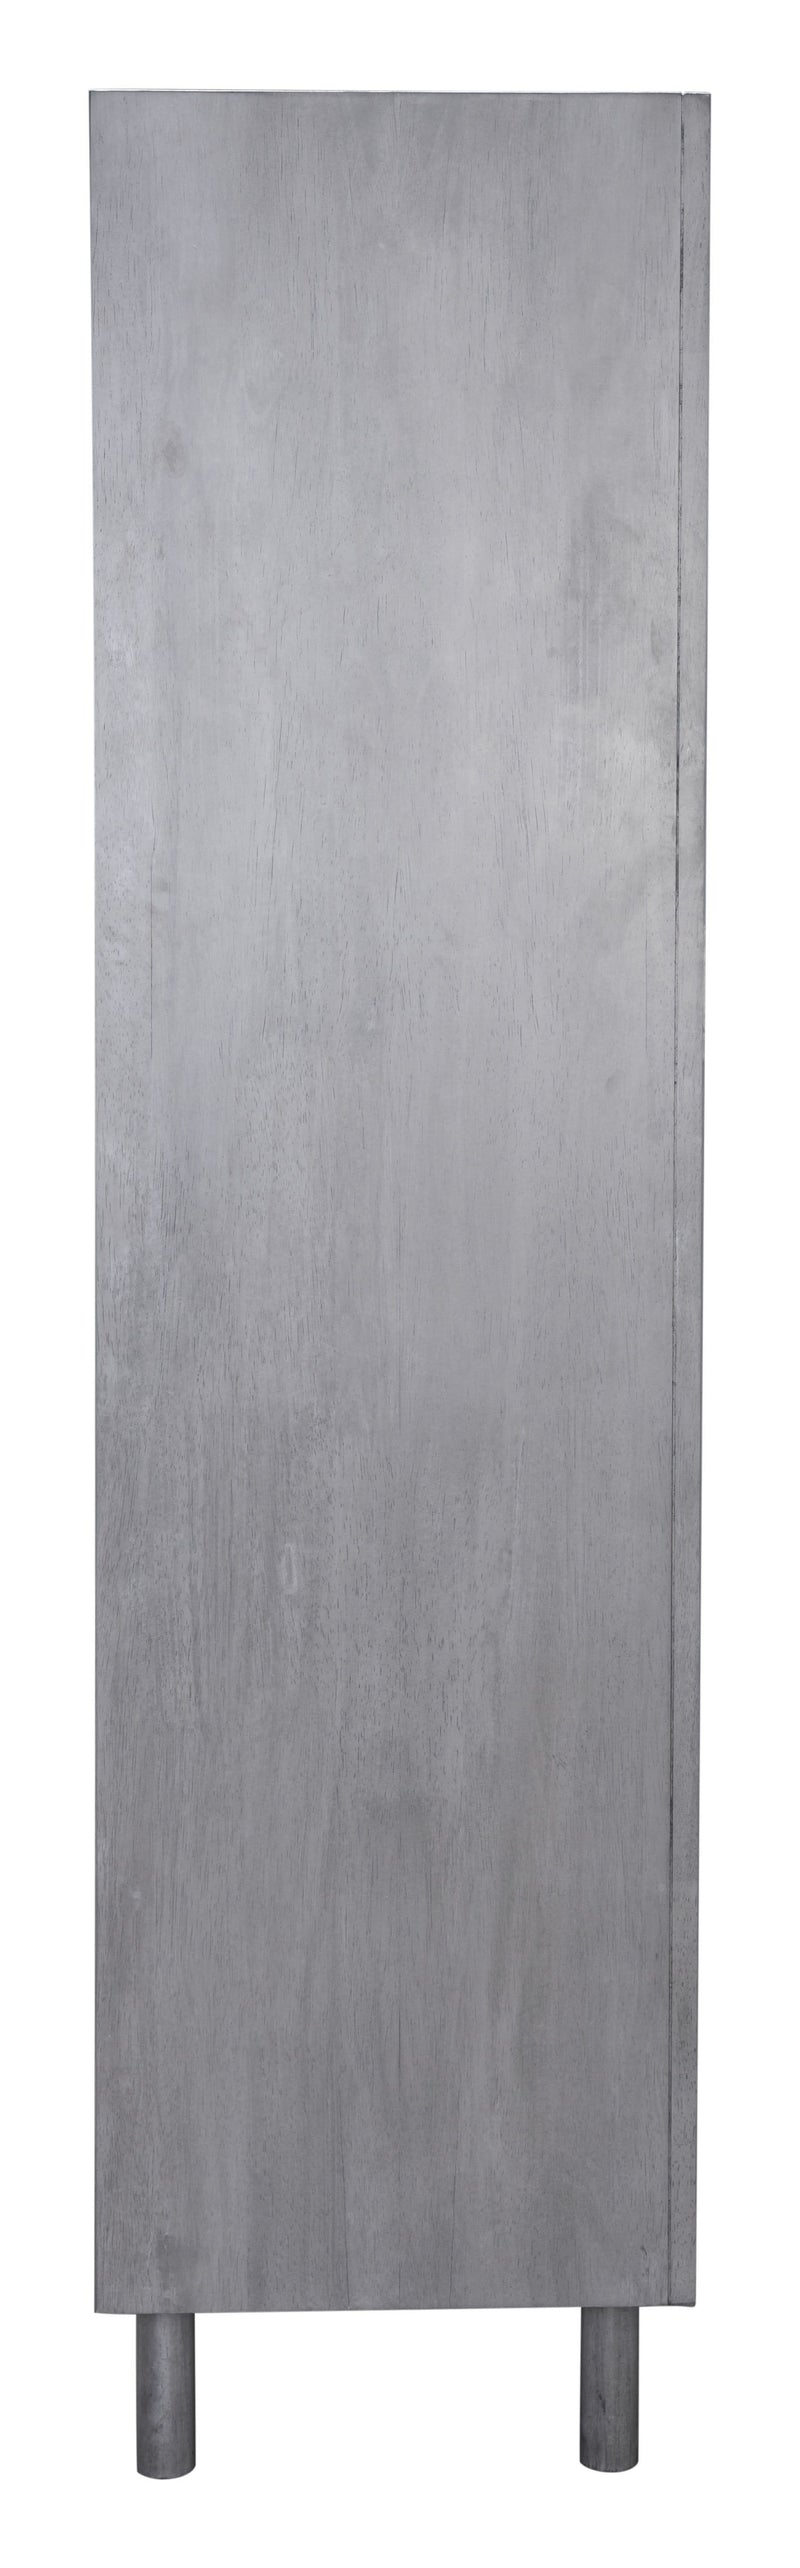 Wall Shelf Unit - 35.4" x 15.7" x 63" Gray, Rubber Wood Veneer, MDF, Wide Tall Shelf